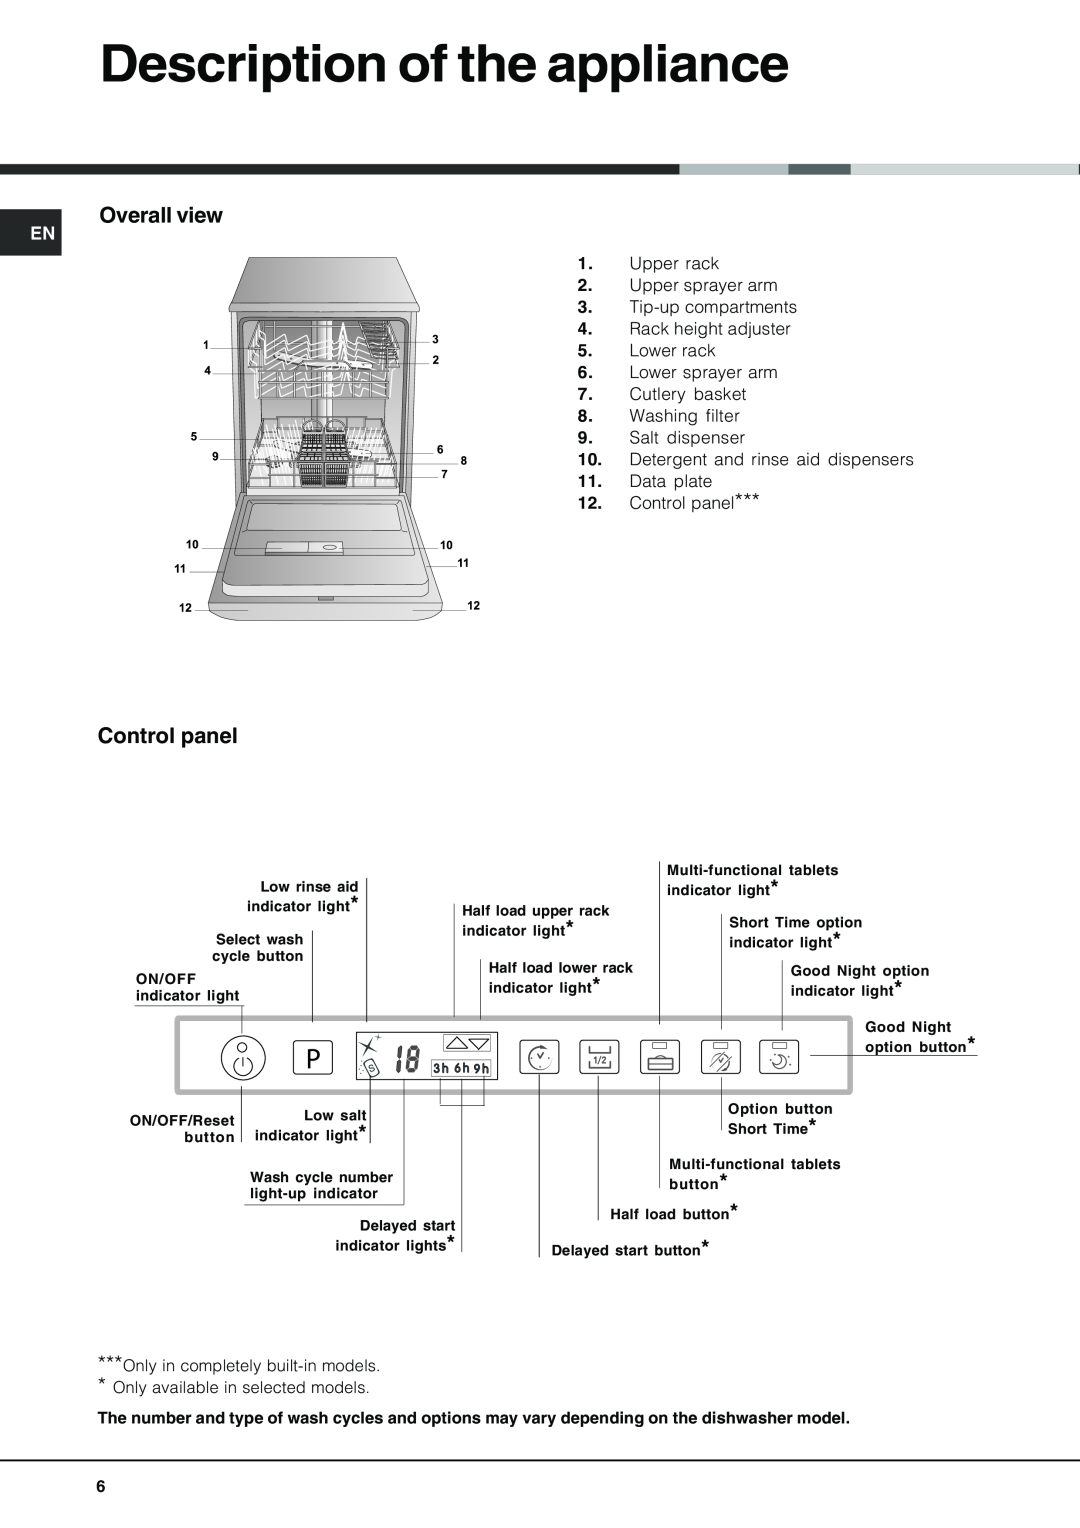 Hotpoint lft 3214 manual Description of the appliance, Upper rack 2. Upper sprayer arm, Lower rack 6. Lower sprayer arm 